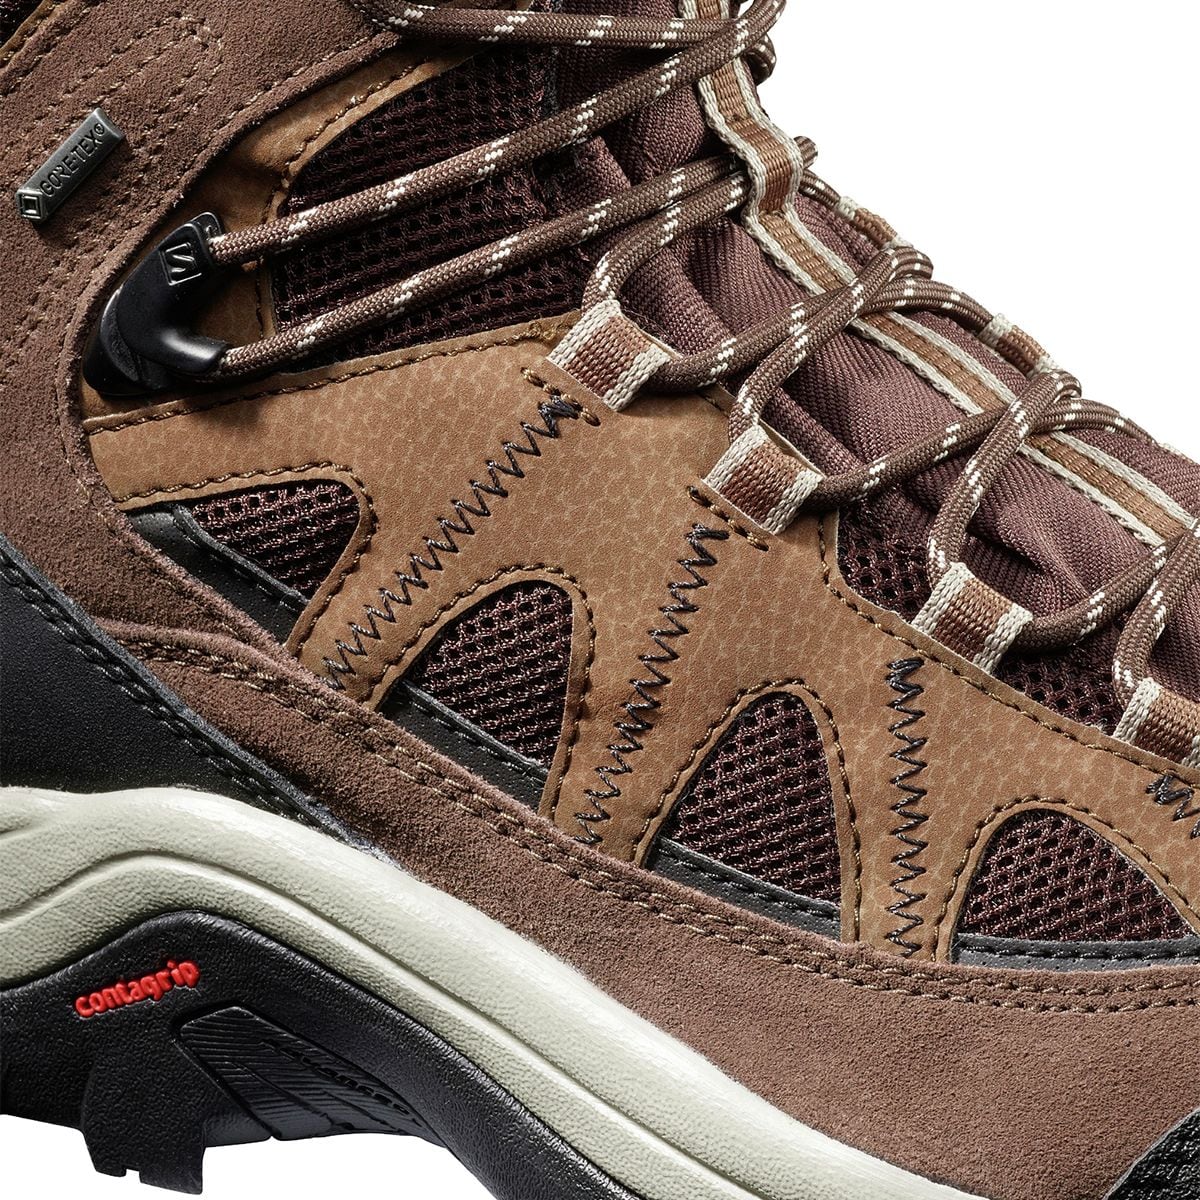 Salomon Authentic GTX Backpacking Boot - Men's - Footwear